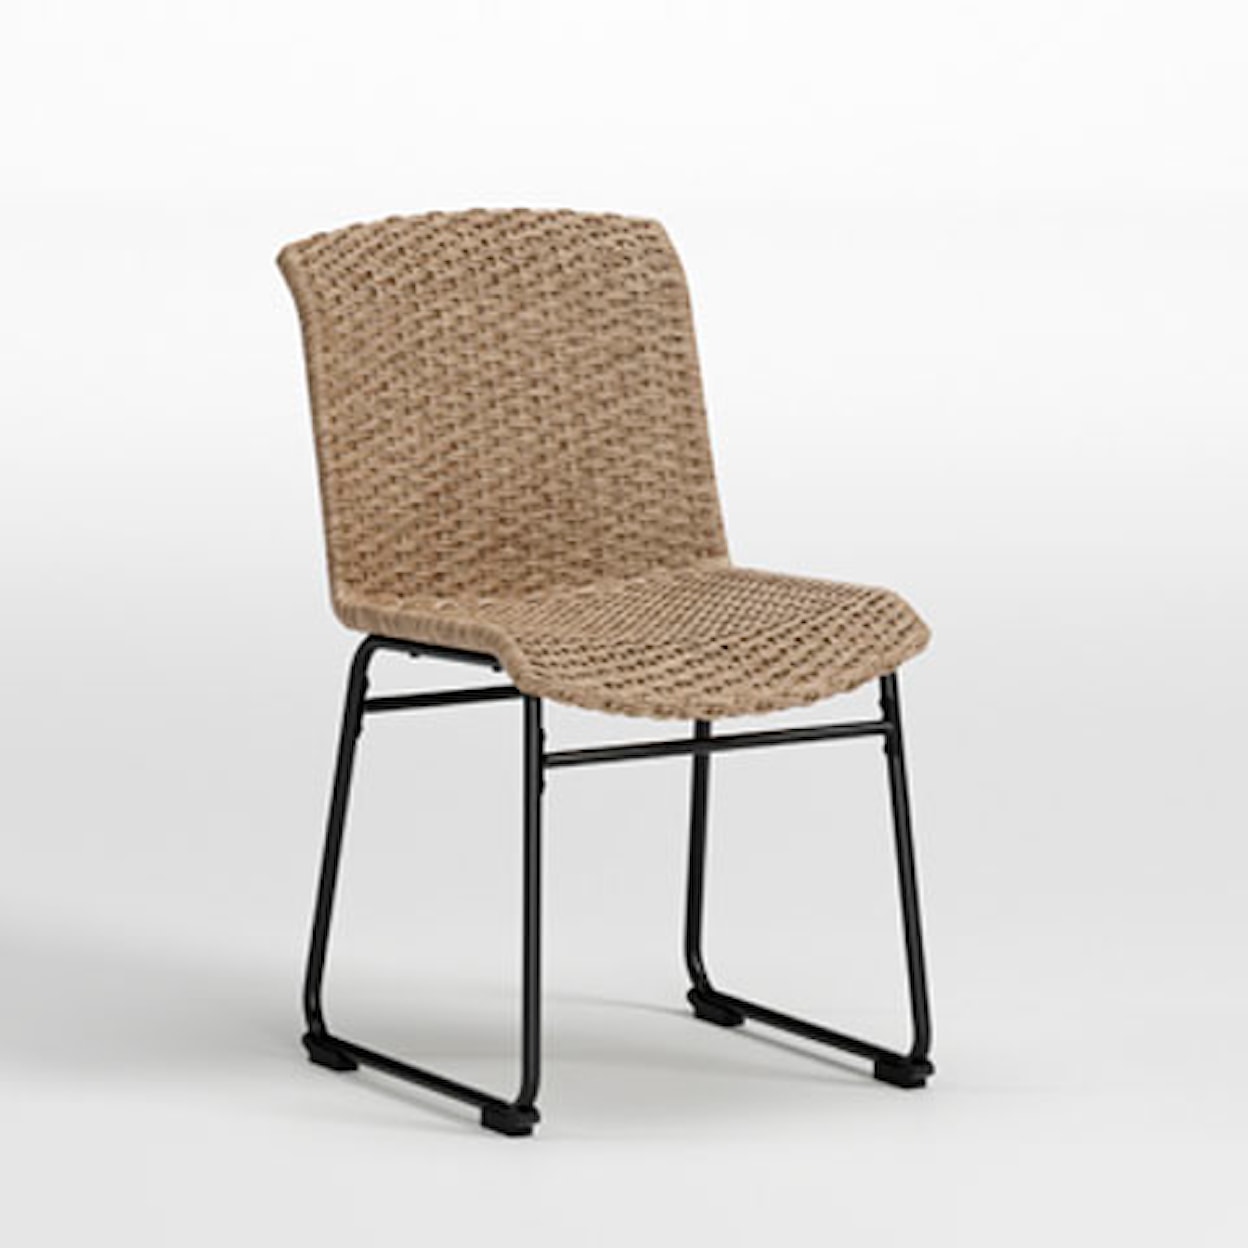 Ashley Furniture Signature Design Amaris Resin Wicker Outdoor Dining Chair